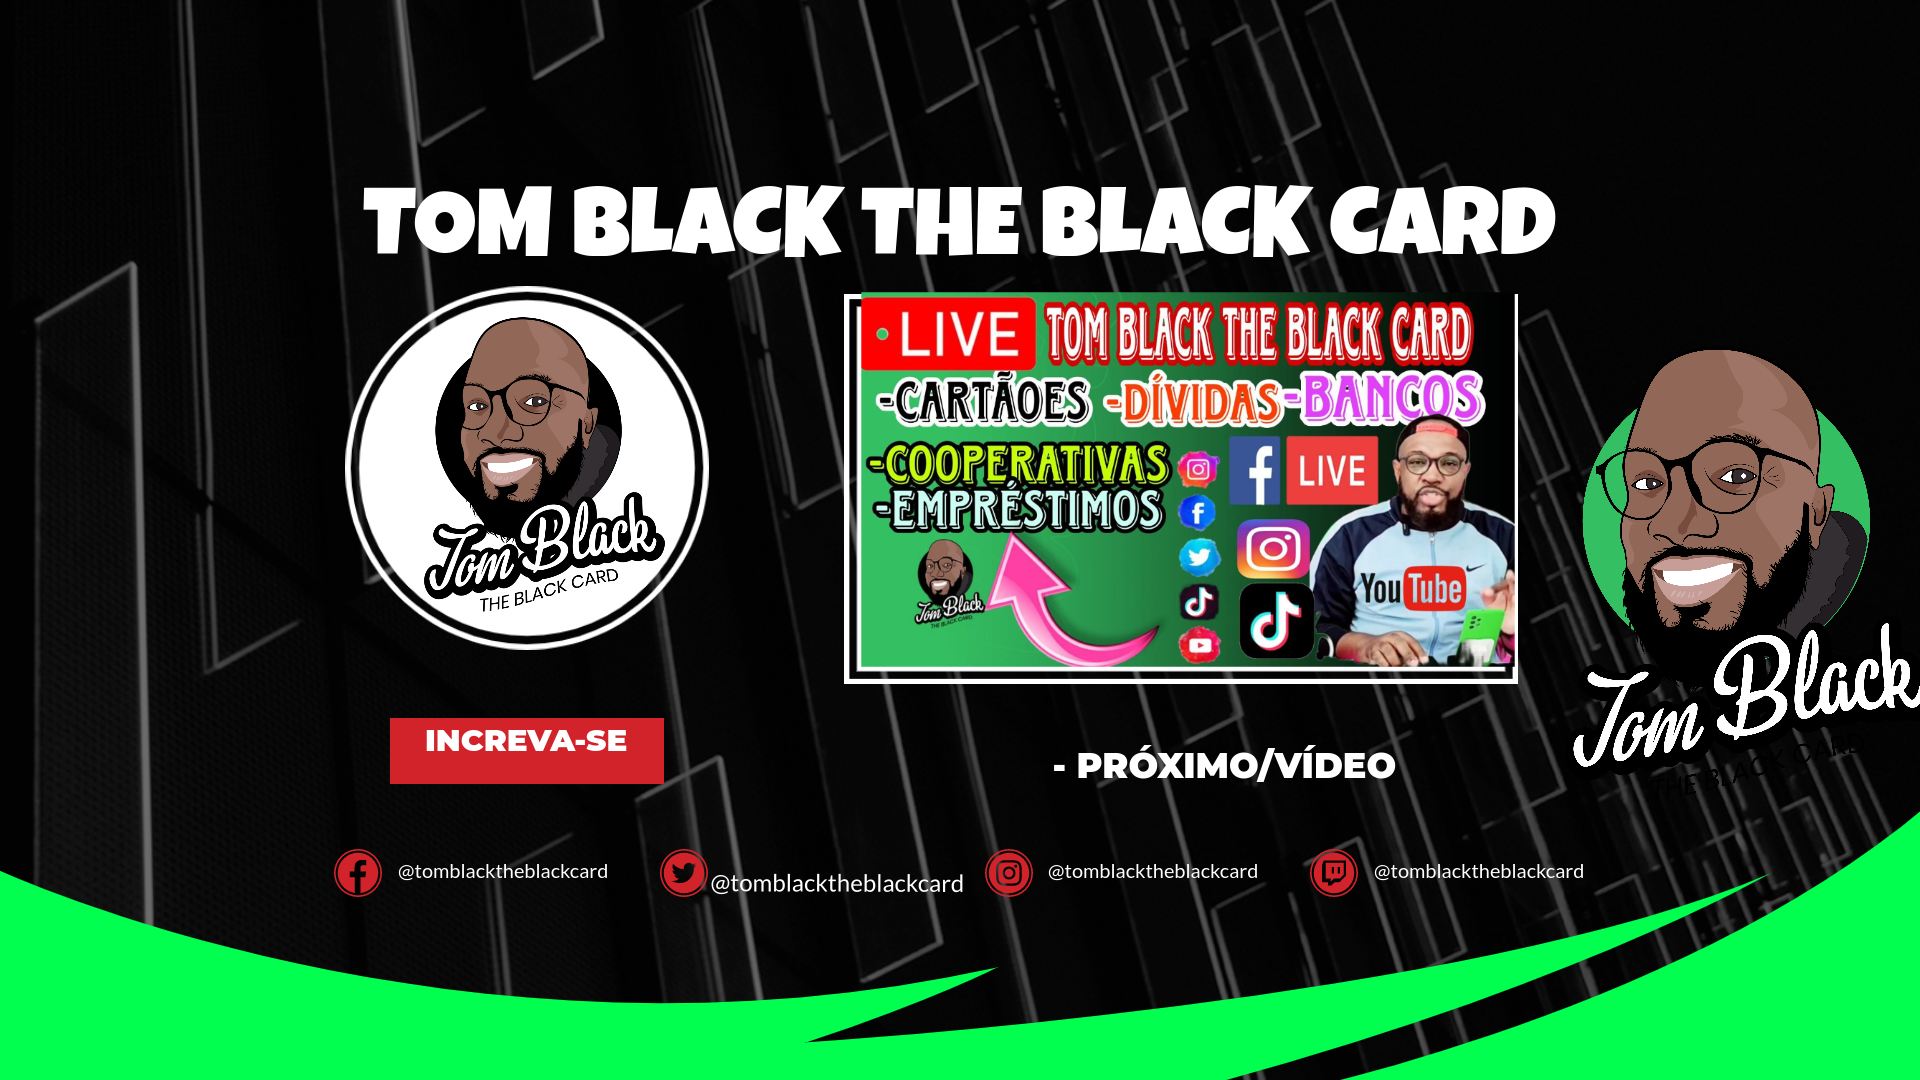 M BLACK THE BLACK CARD

 

INCREVA-SE

@tomblacktheblackcard
|